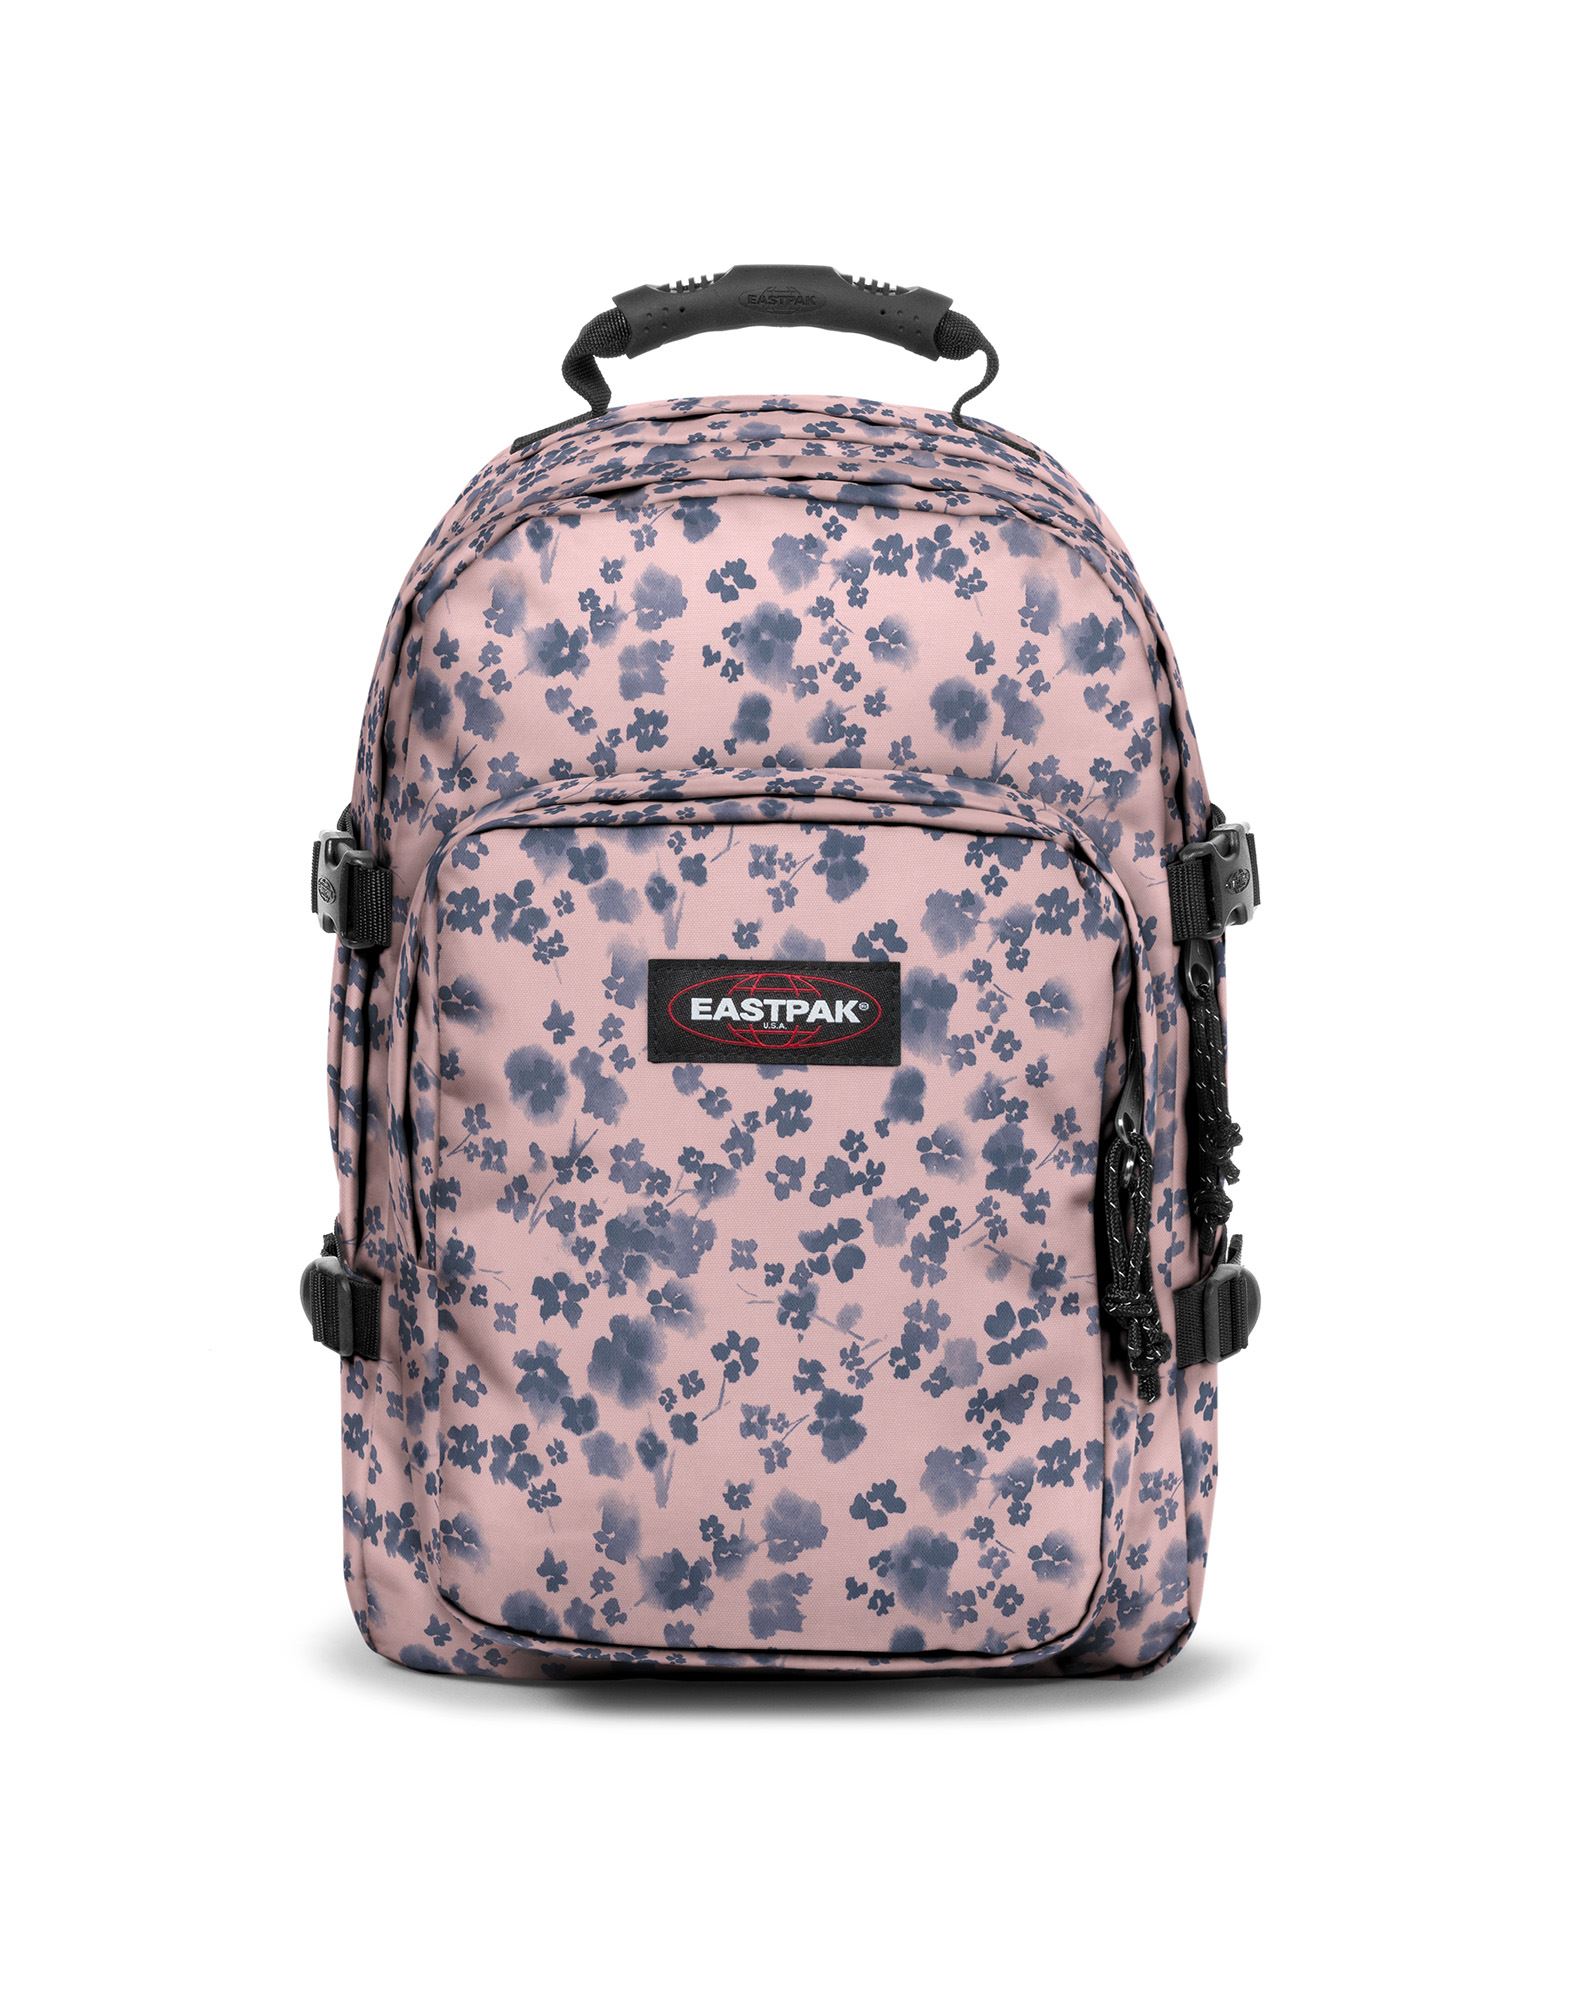 Ga naar beneden dinsdag Misleidend Eastpak Backpacks In Light Pink | ModeSens